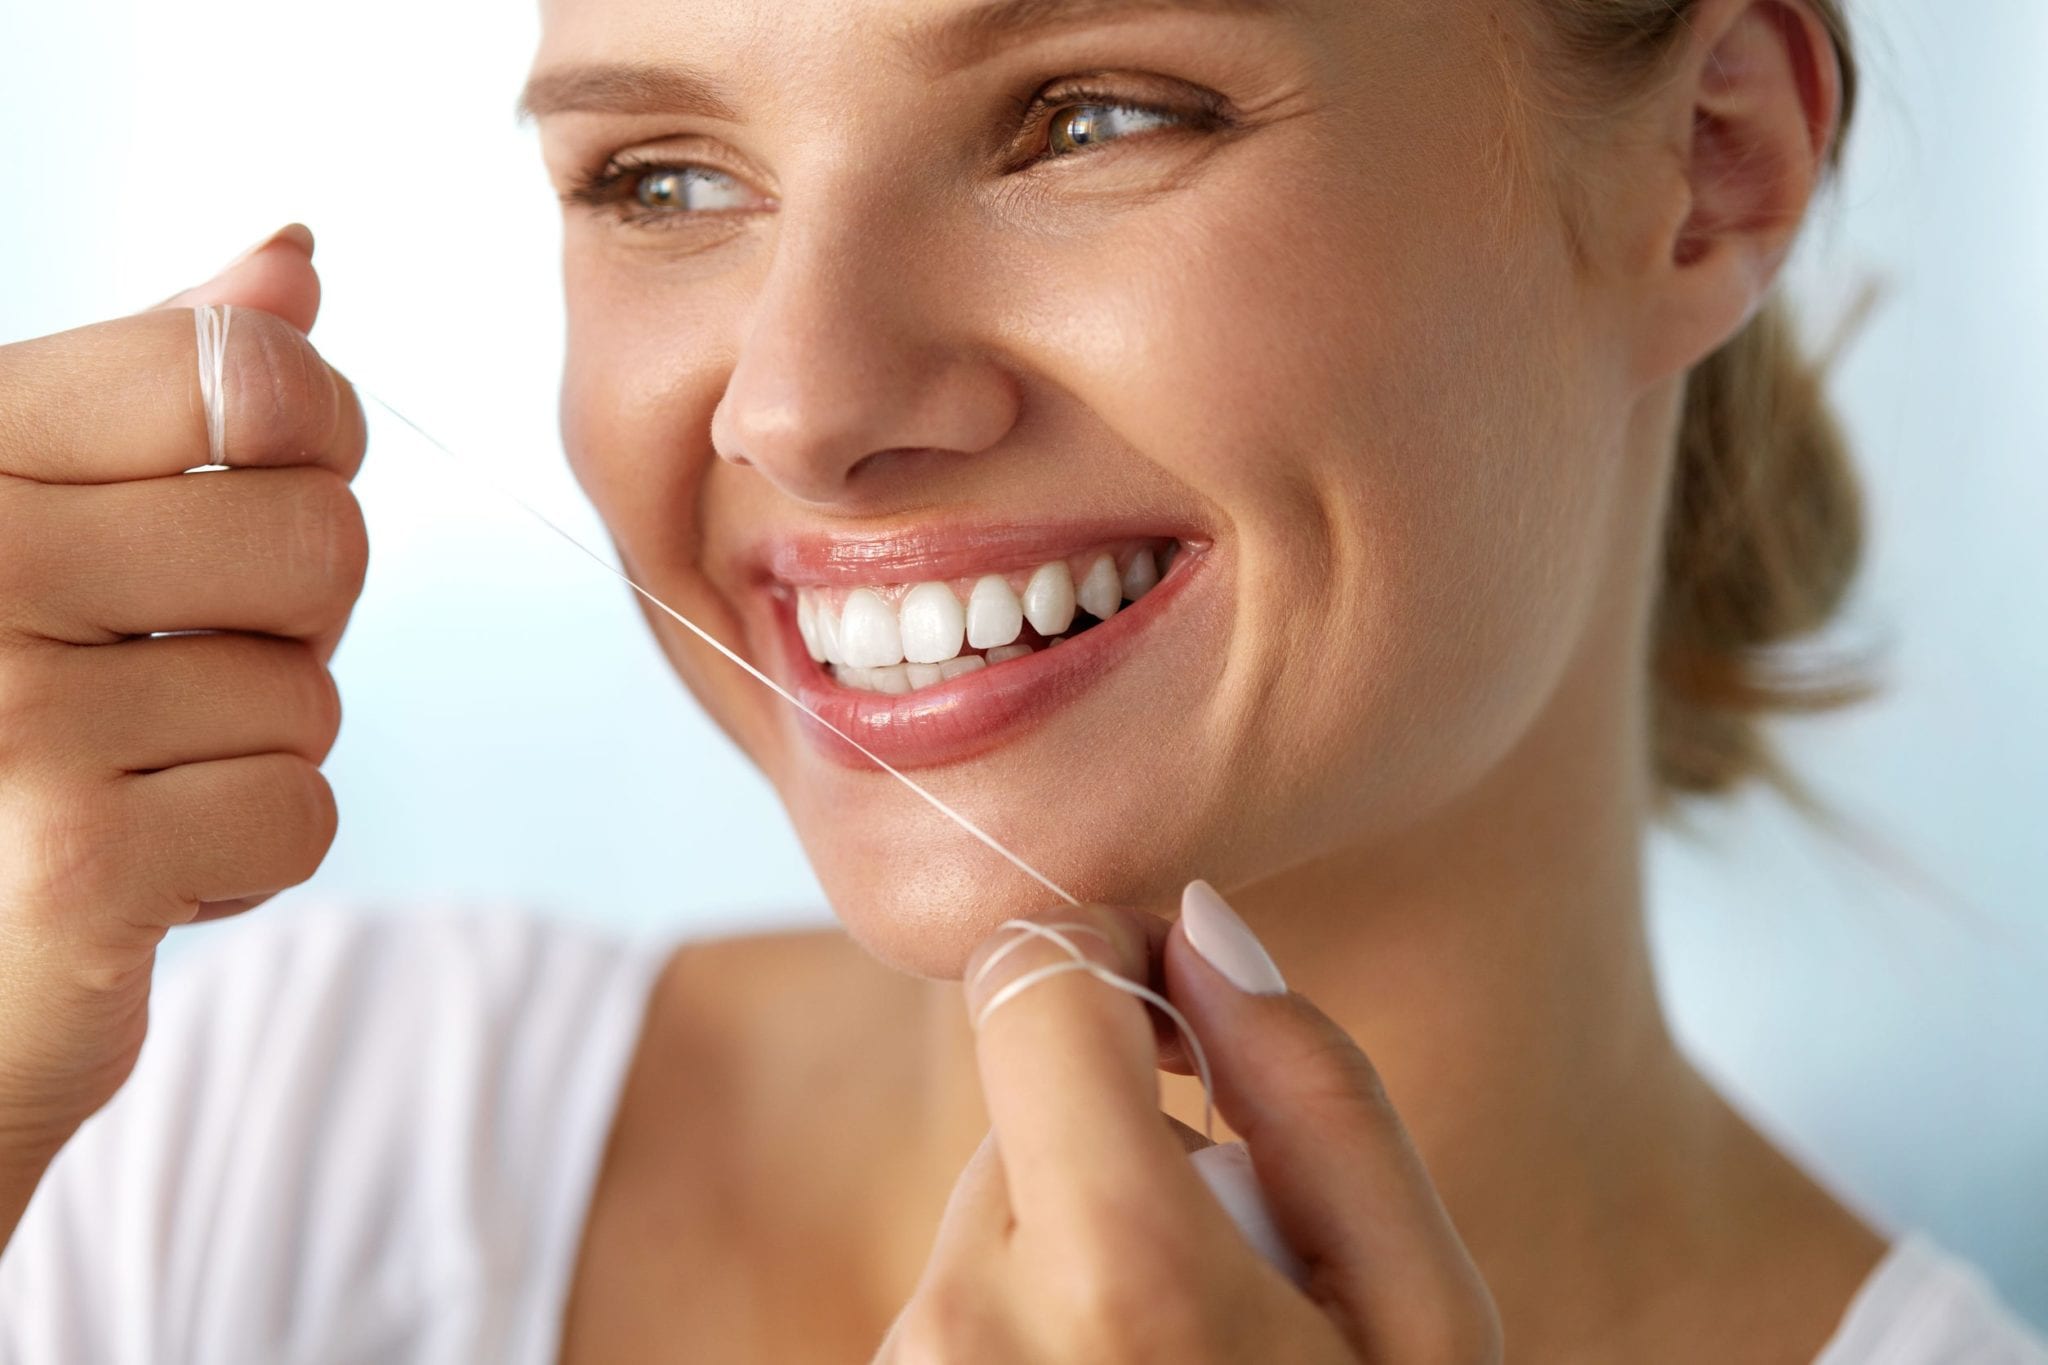 6 Myths about Dental Hygiene